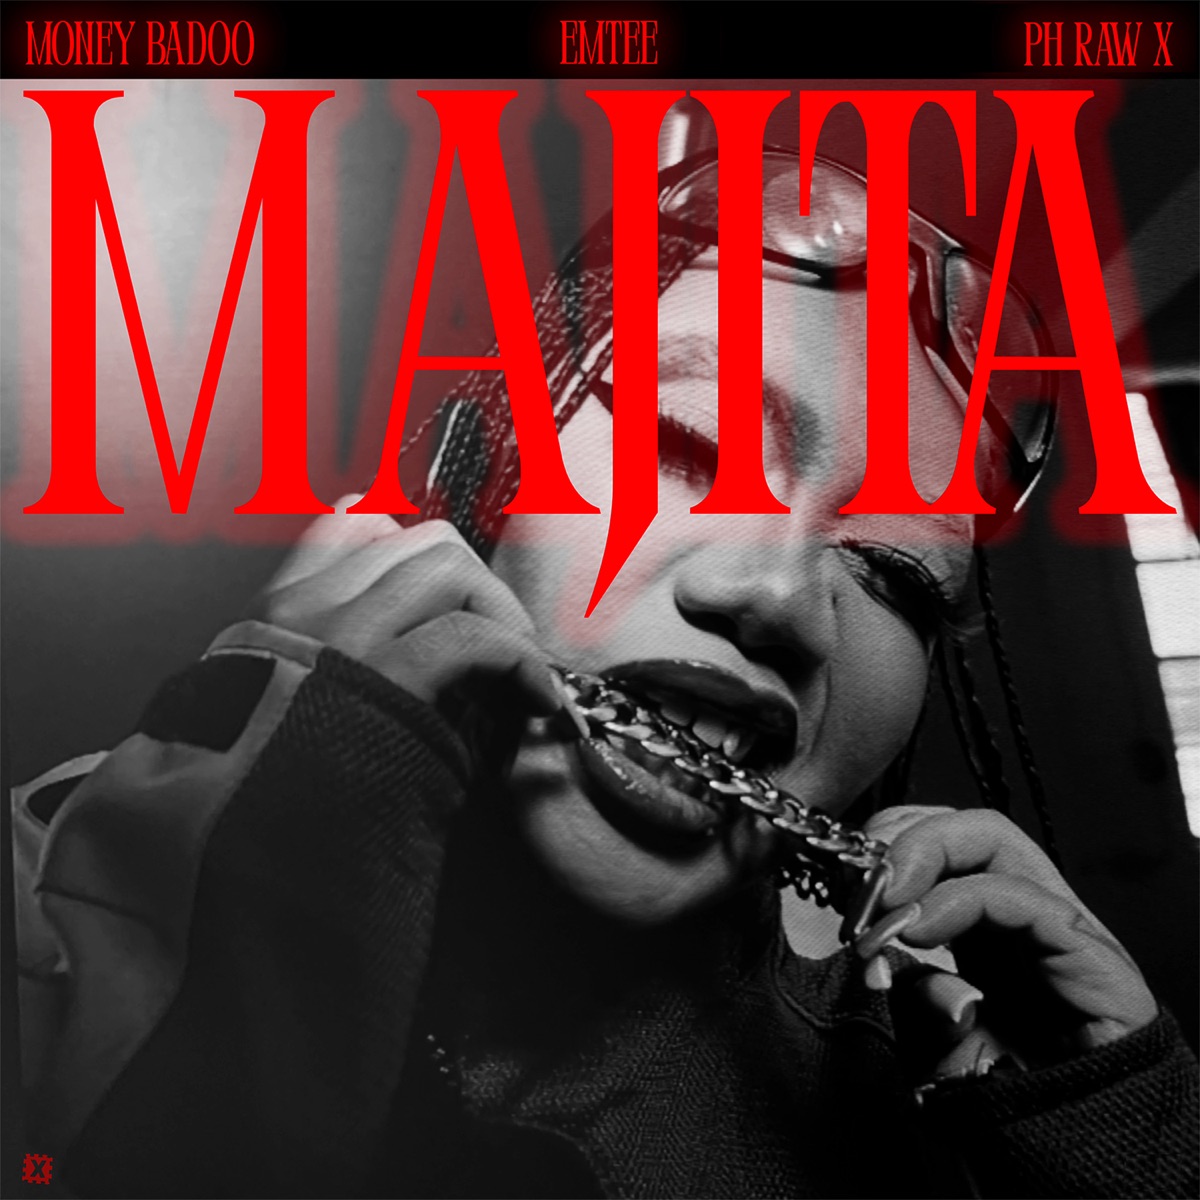 Money Badoo Majita Mp3 Download